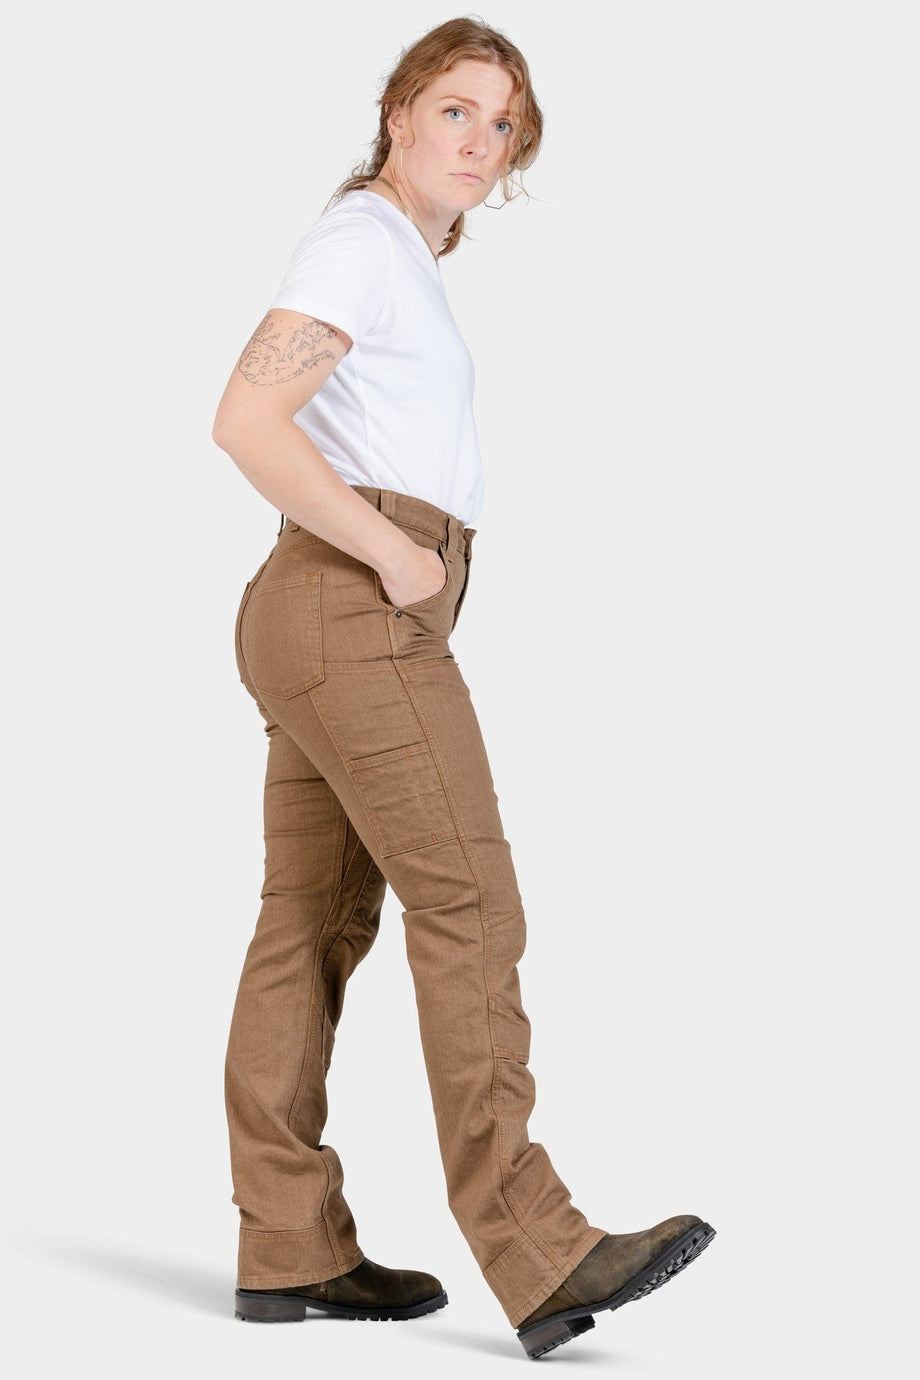 Dovetail Workwear Women's Saddle Brown Canvas Work Pants (6 X 32